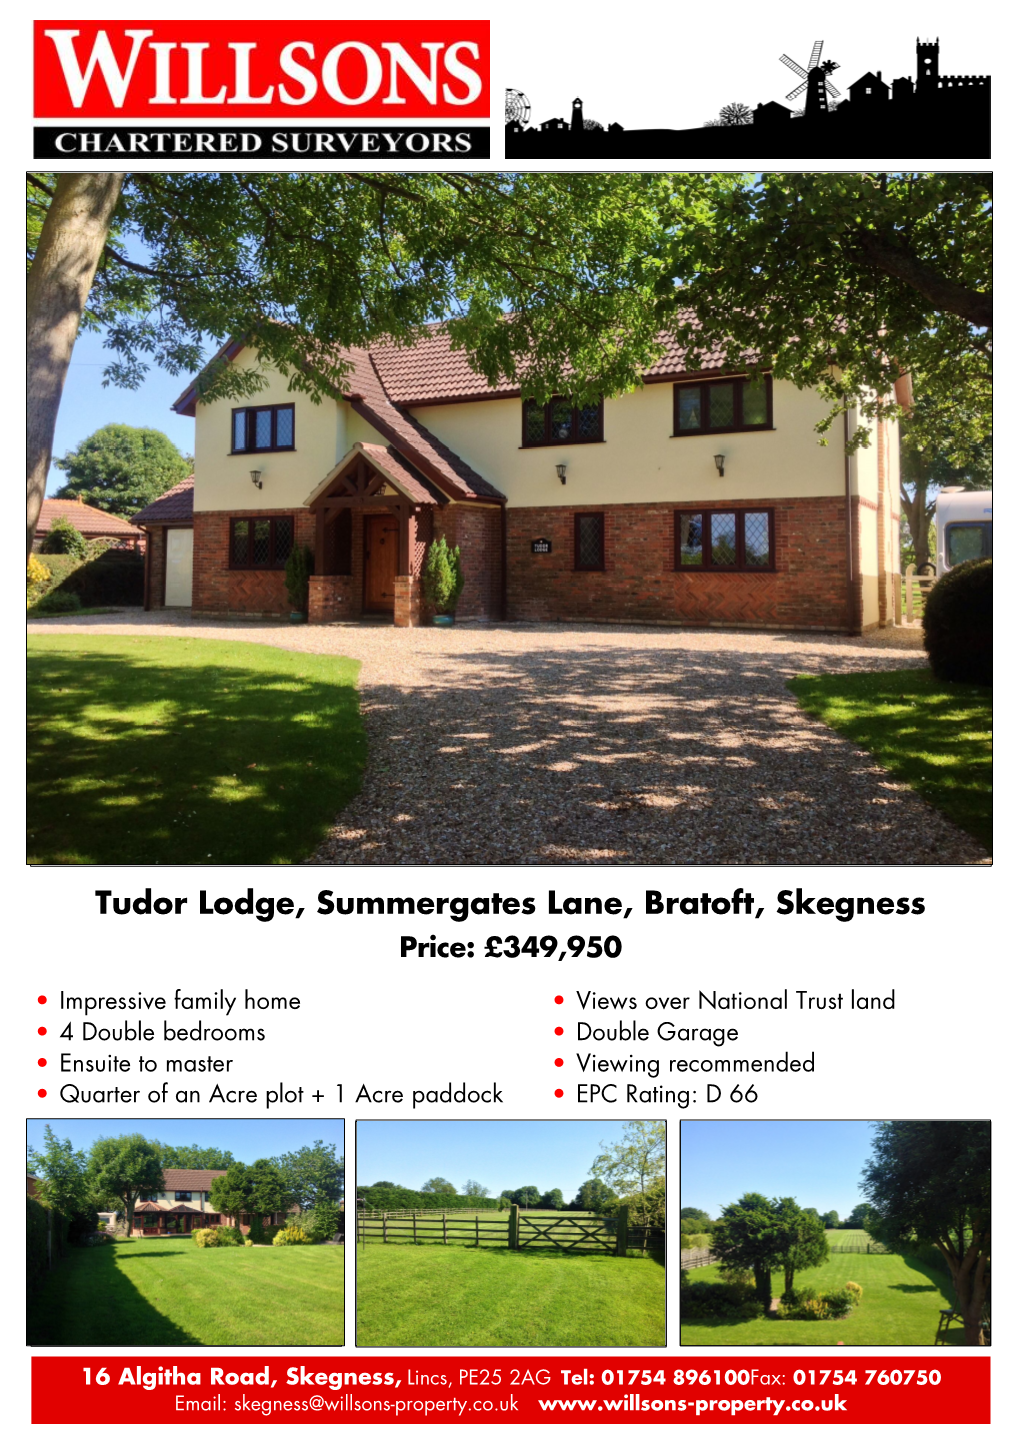 Tudor Lodge, Summergates Lane, Bratoft, Skegness